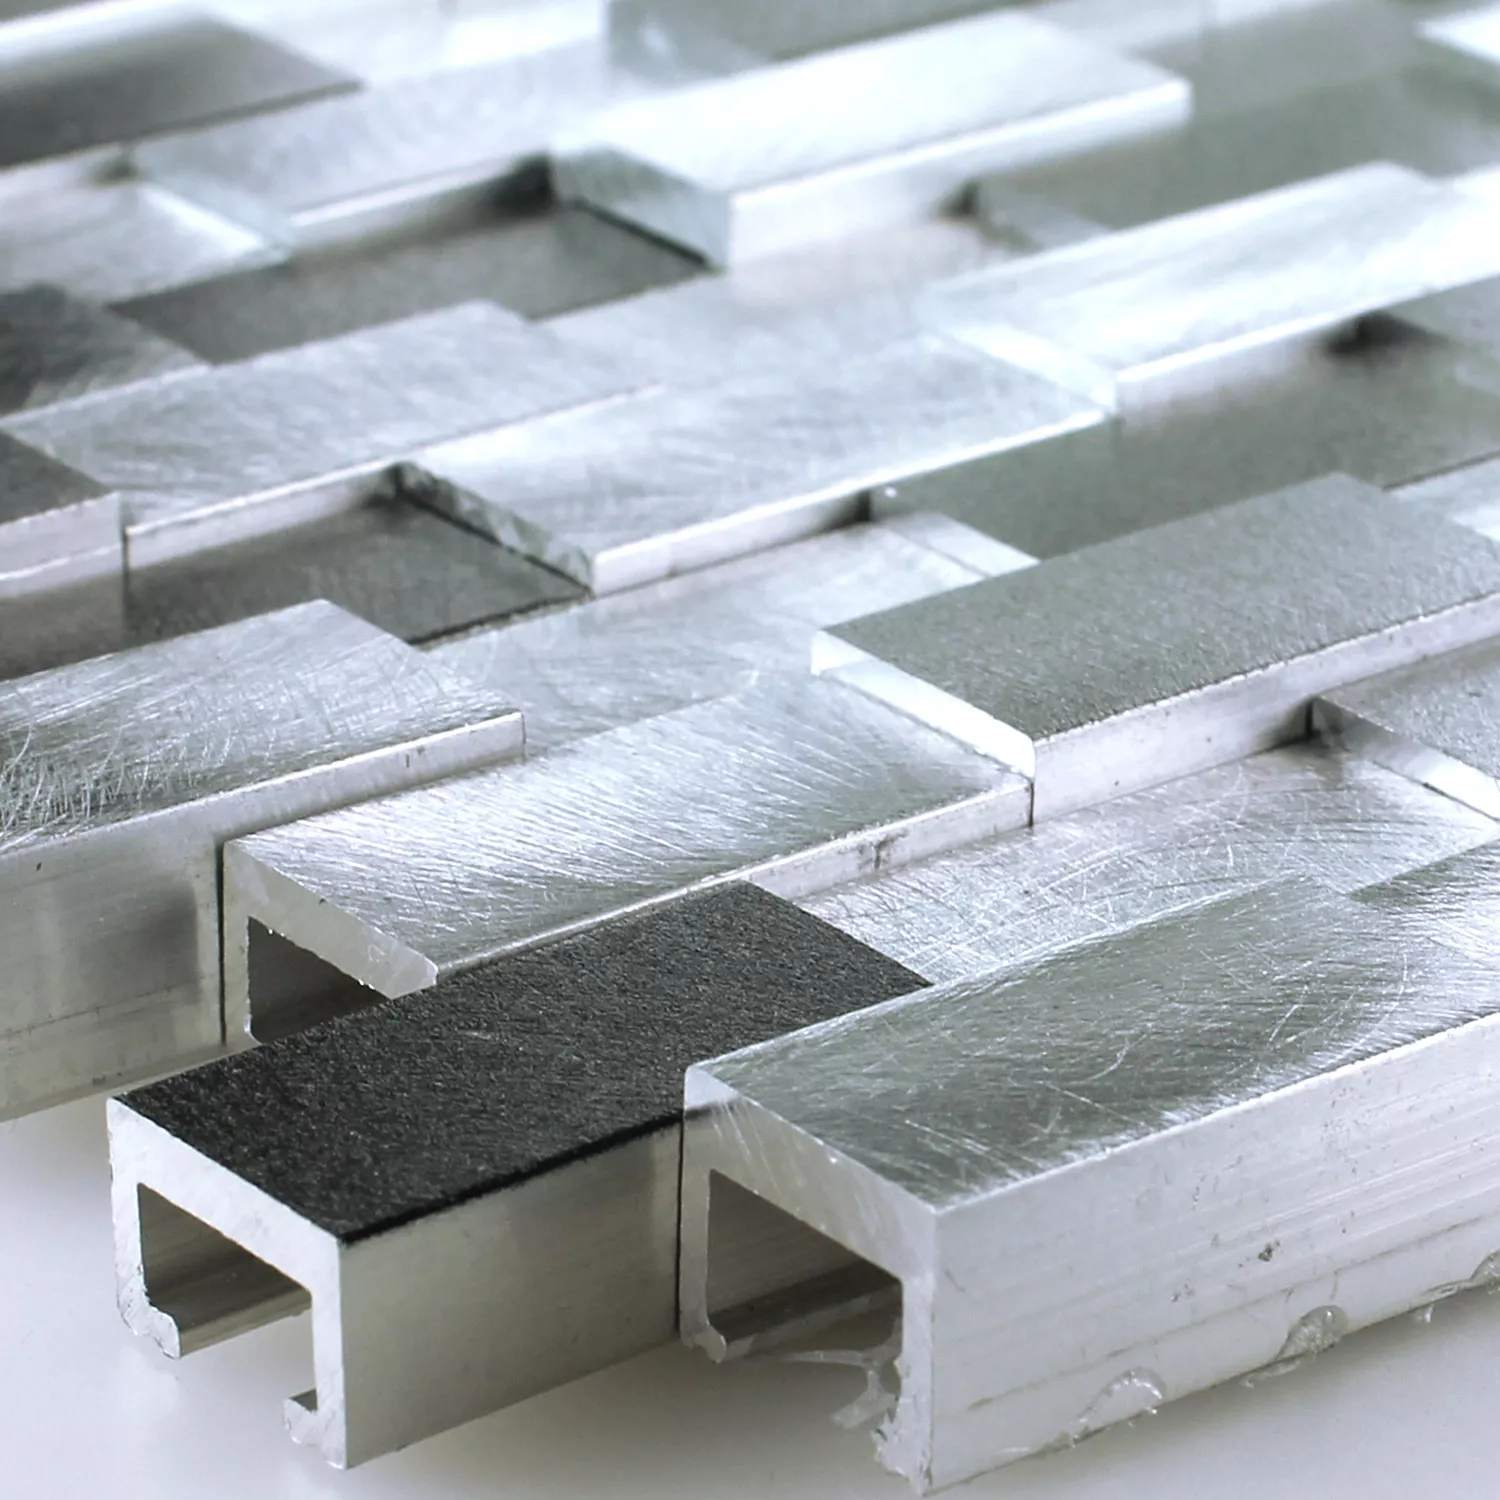 Prov Aluminium Metall 3D Mosaik Svart Grå